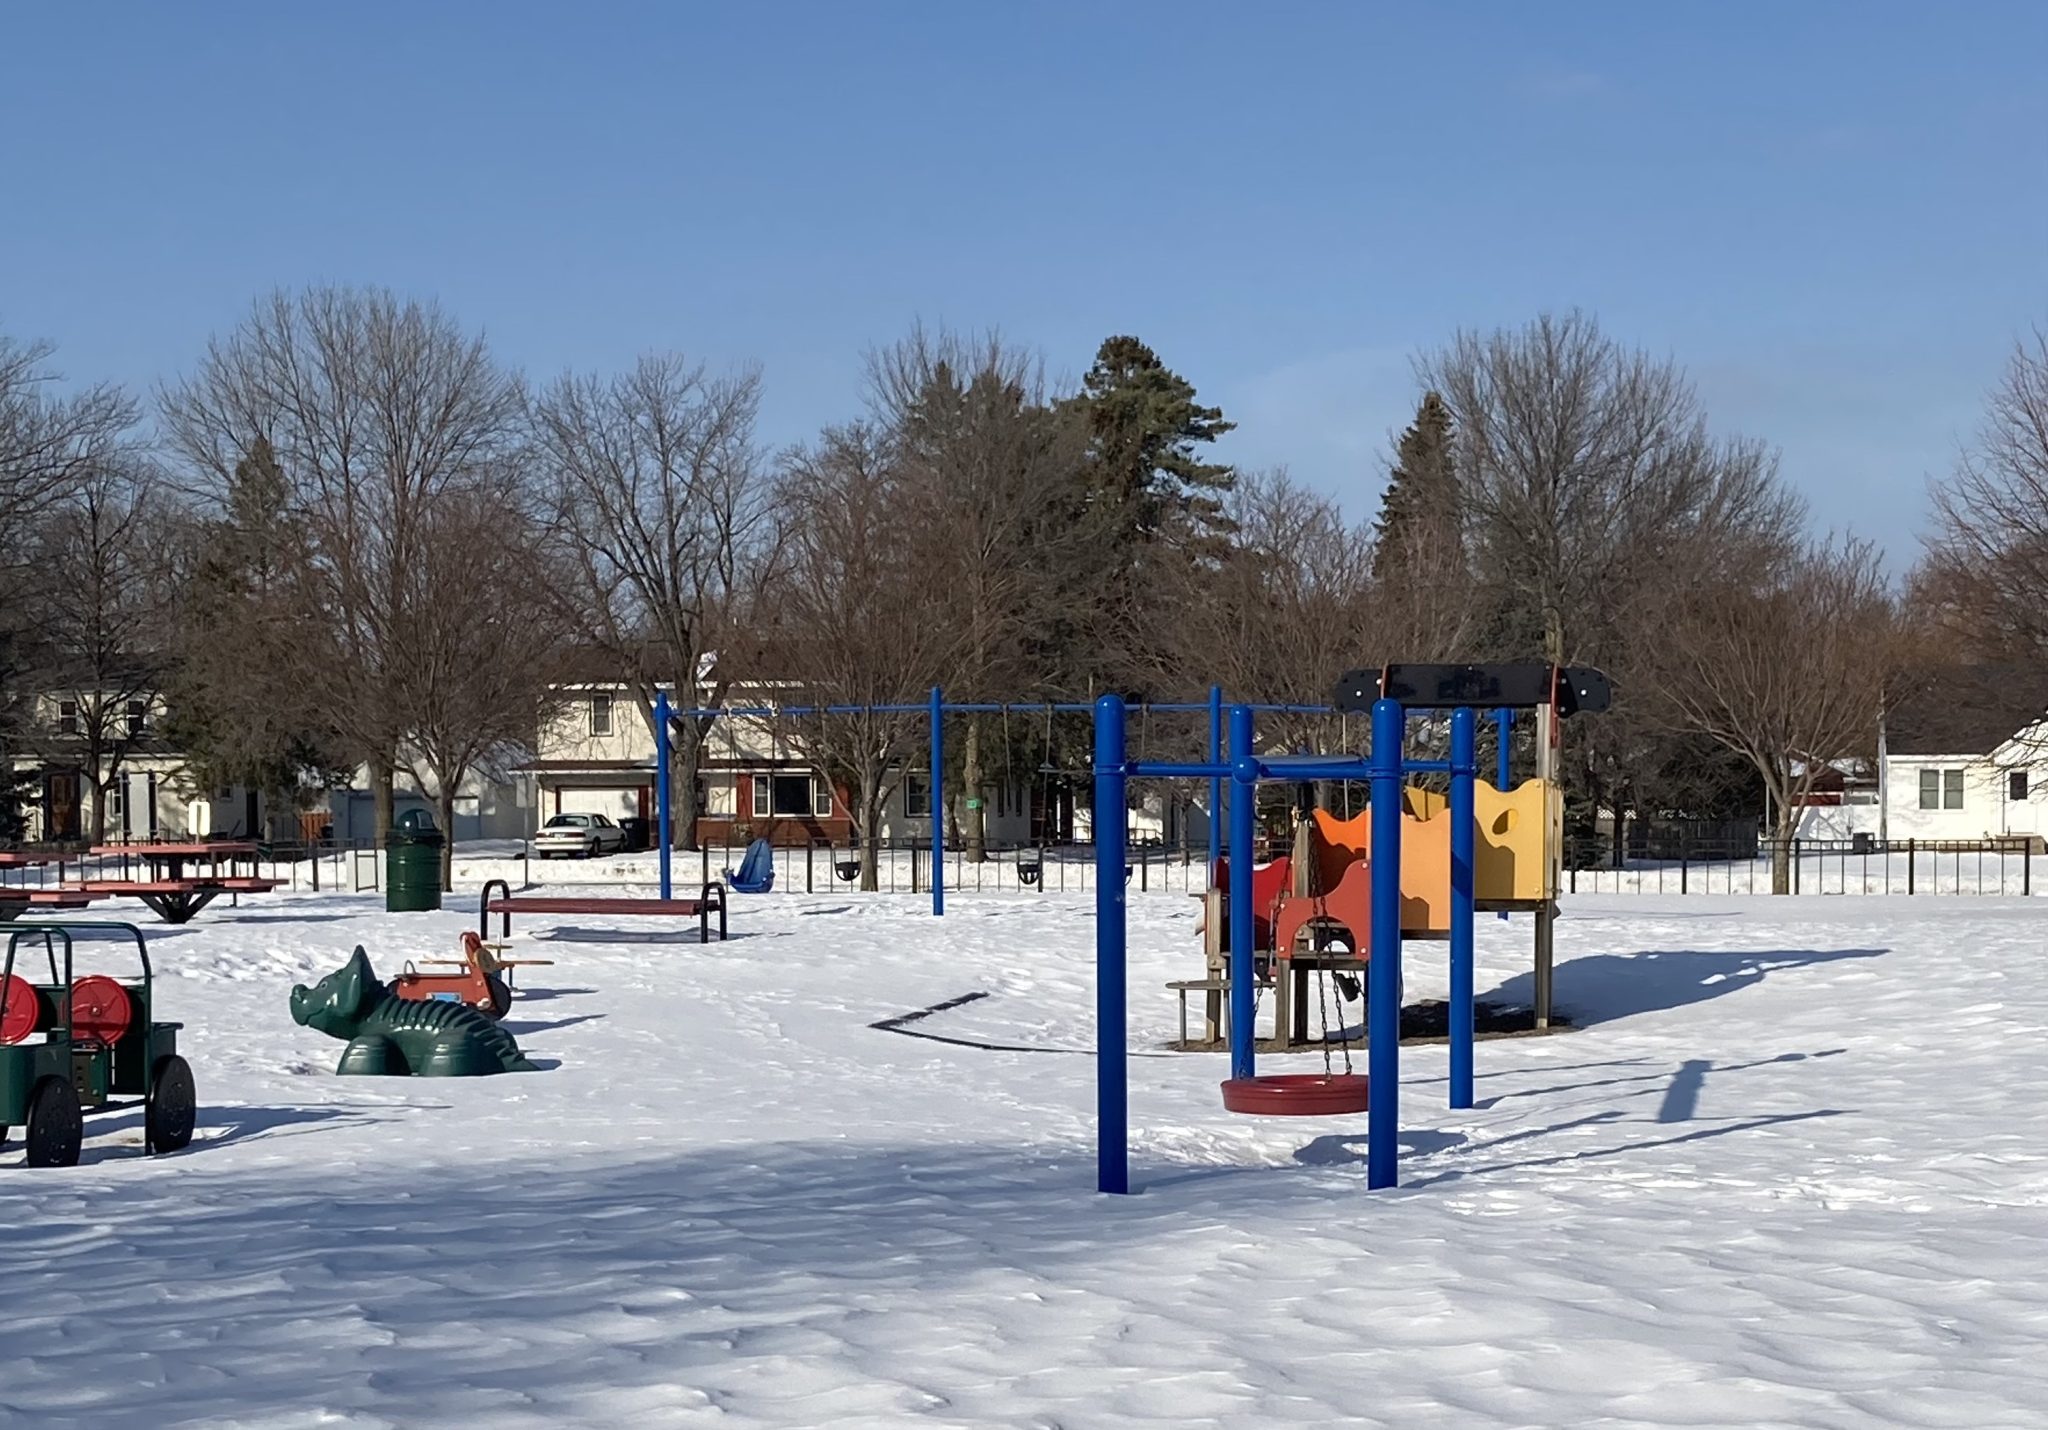 A children play ground at a park